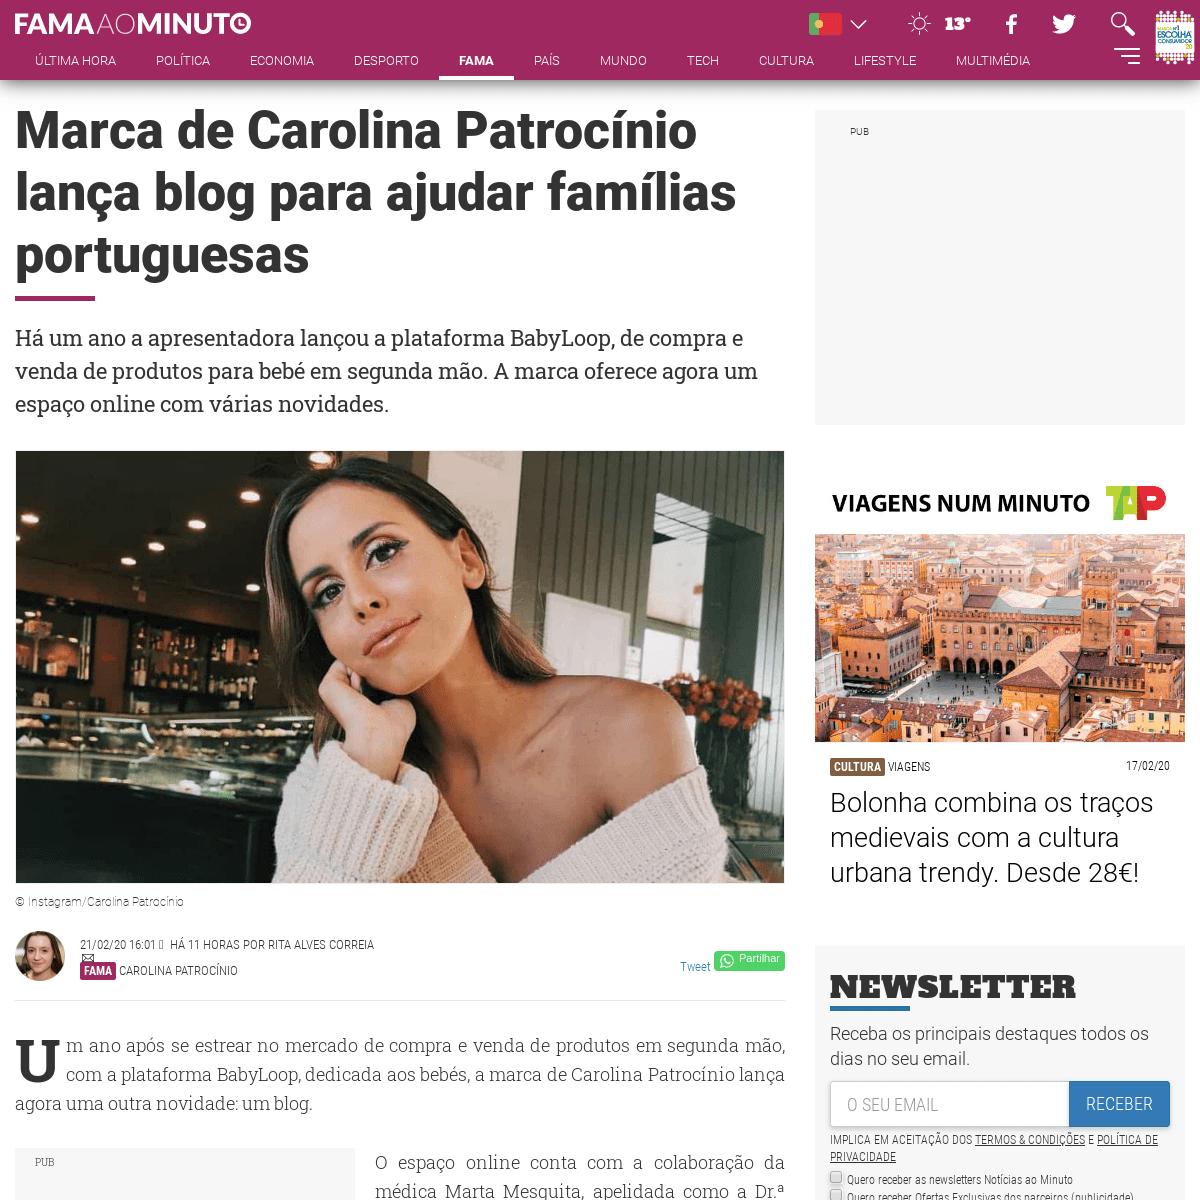 A complete backup of www.noticiasaominuto.com/fama/1418828/marca-de-carolina-patrocinio-lanca-blog-para-ajudar-familias-portugue